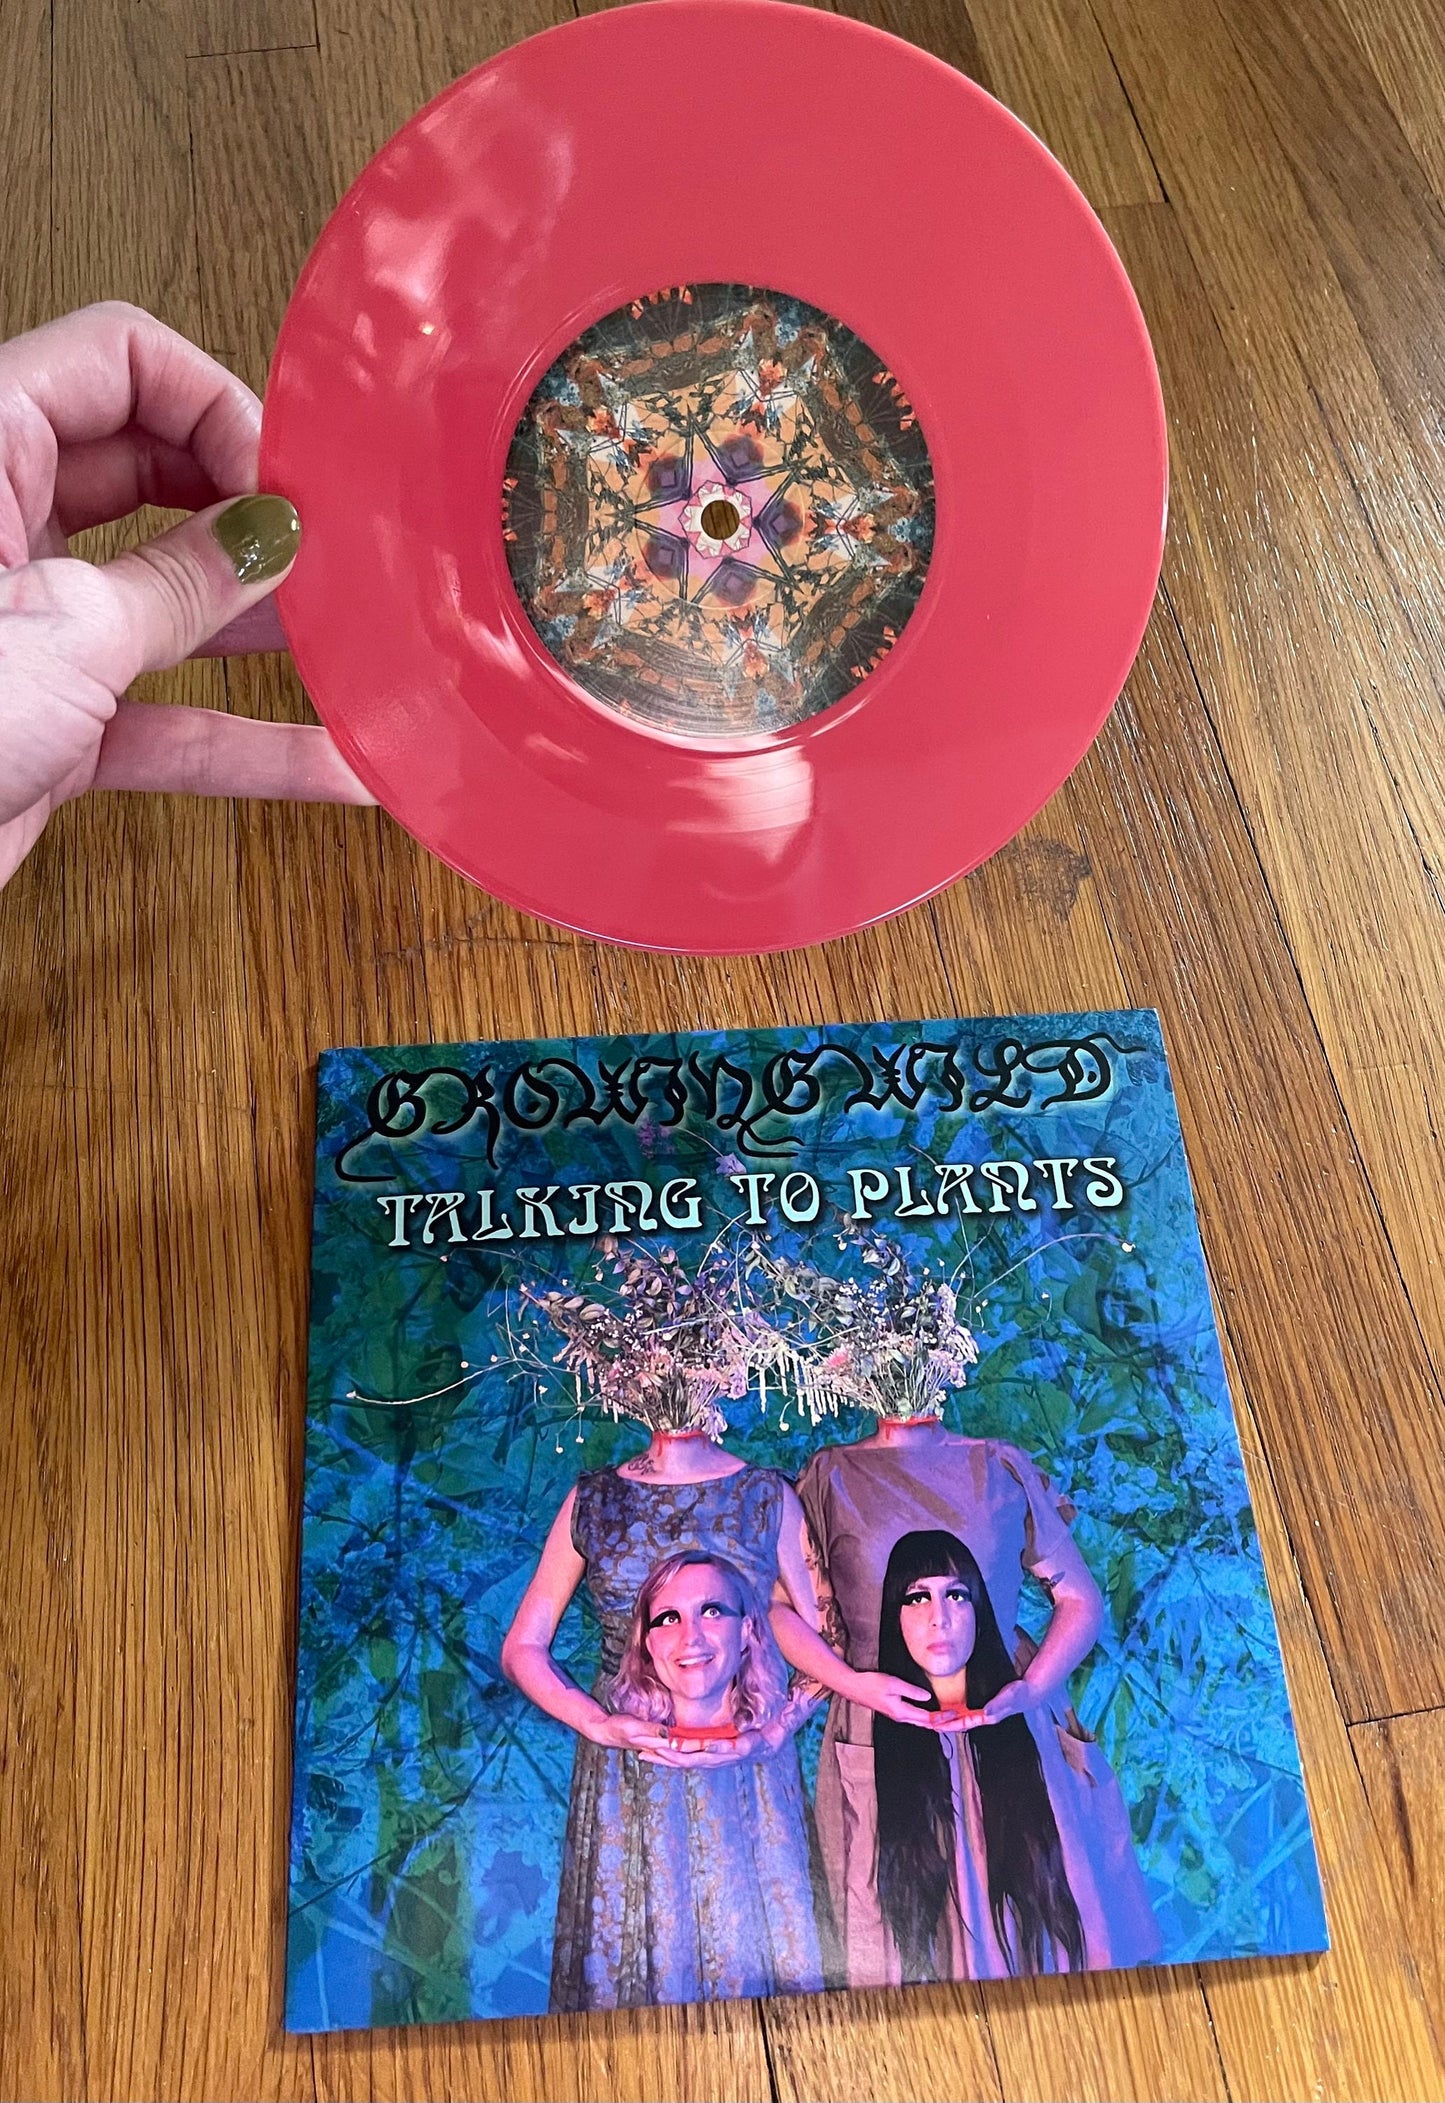 Growing Wild x Talking to Plants 7" vinyl record